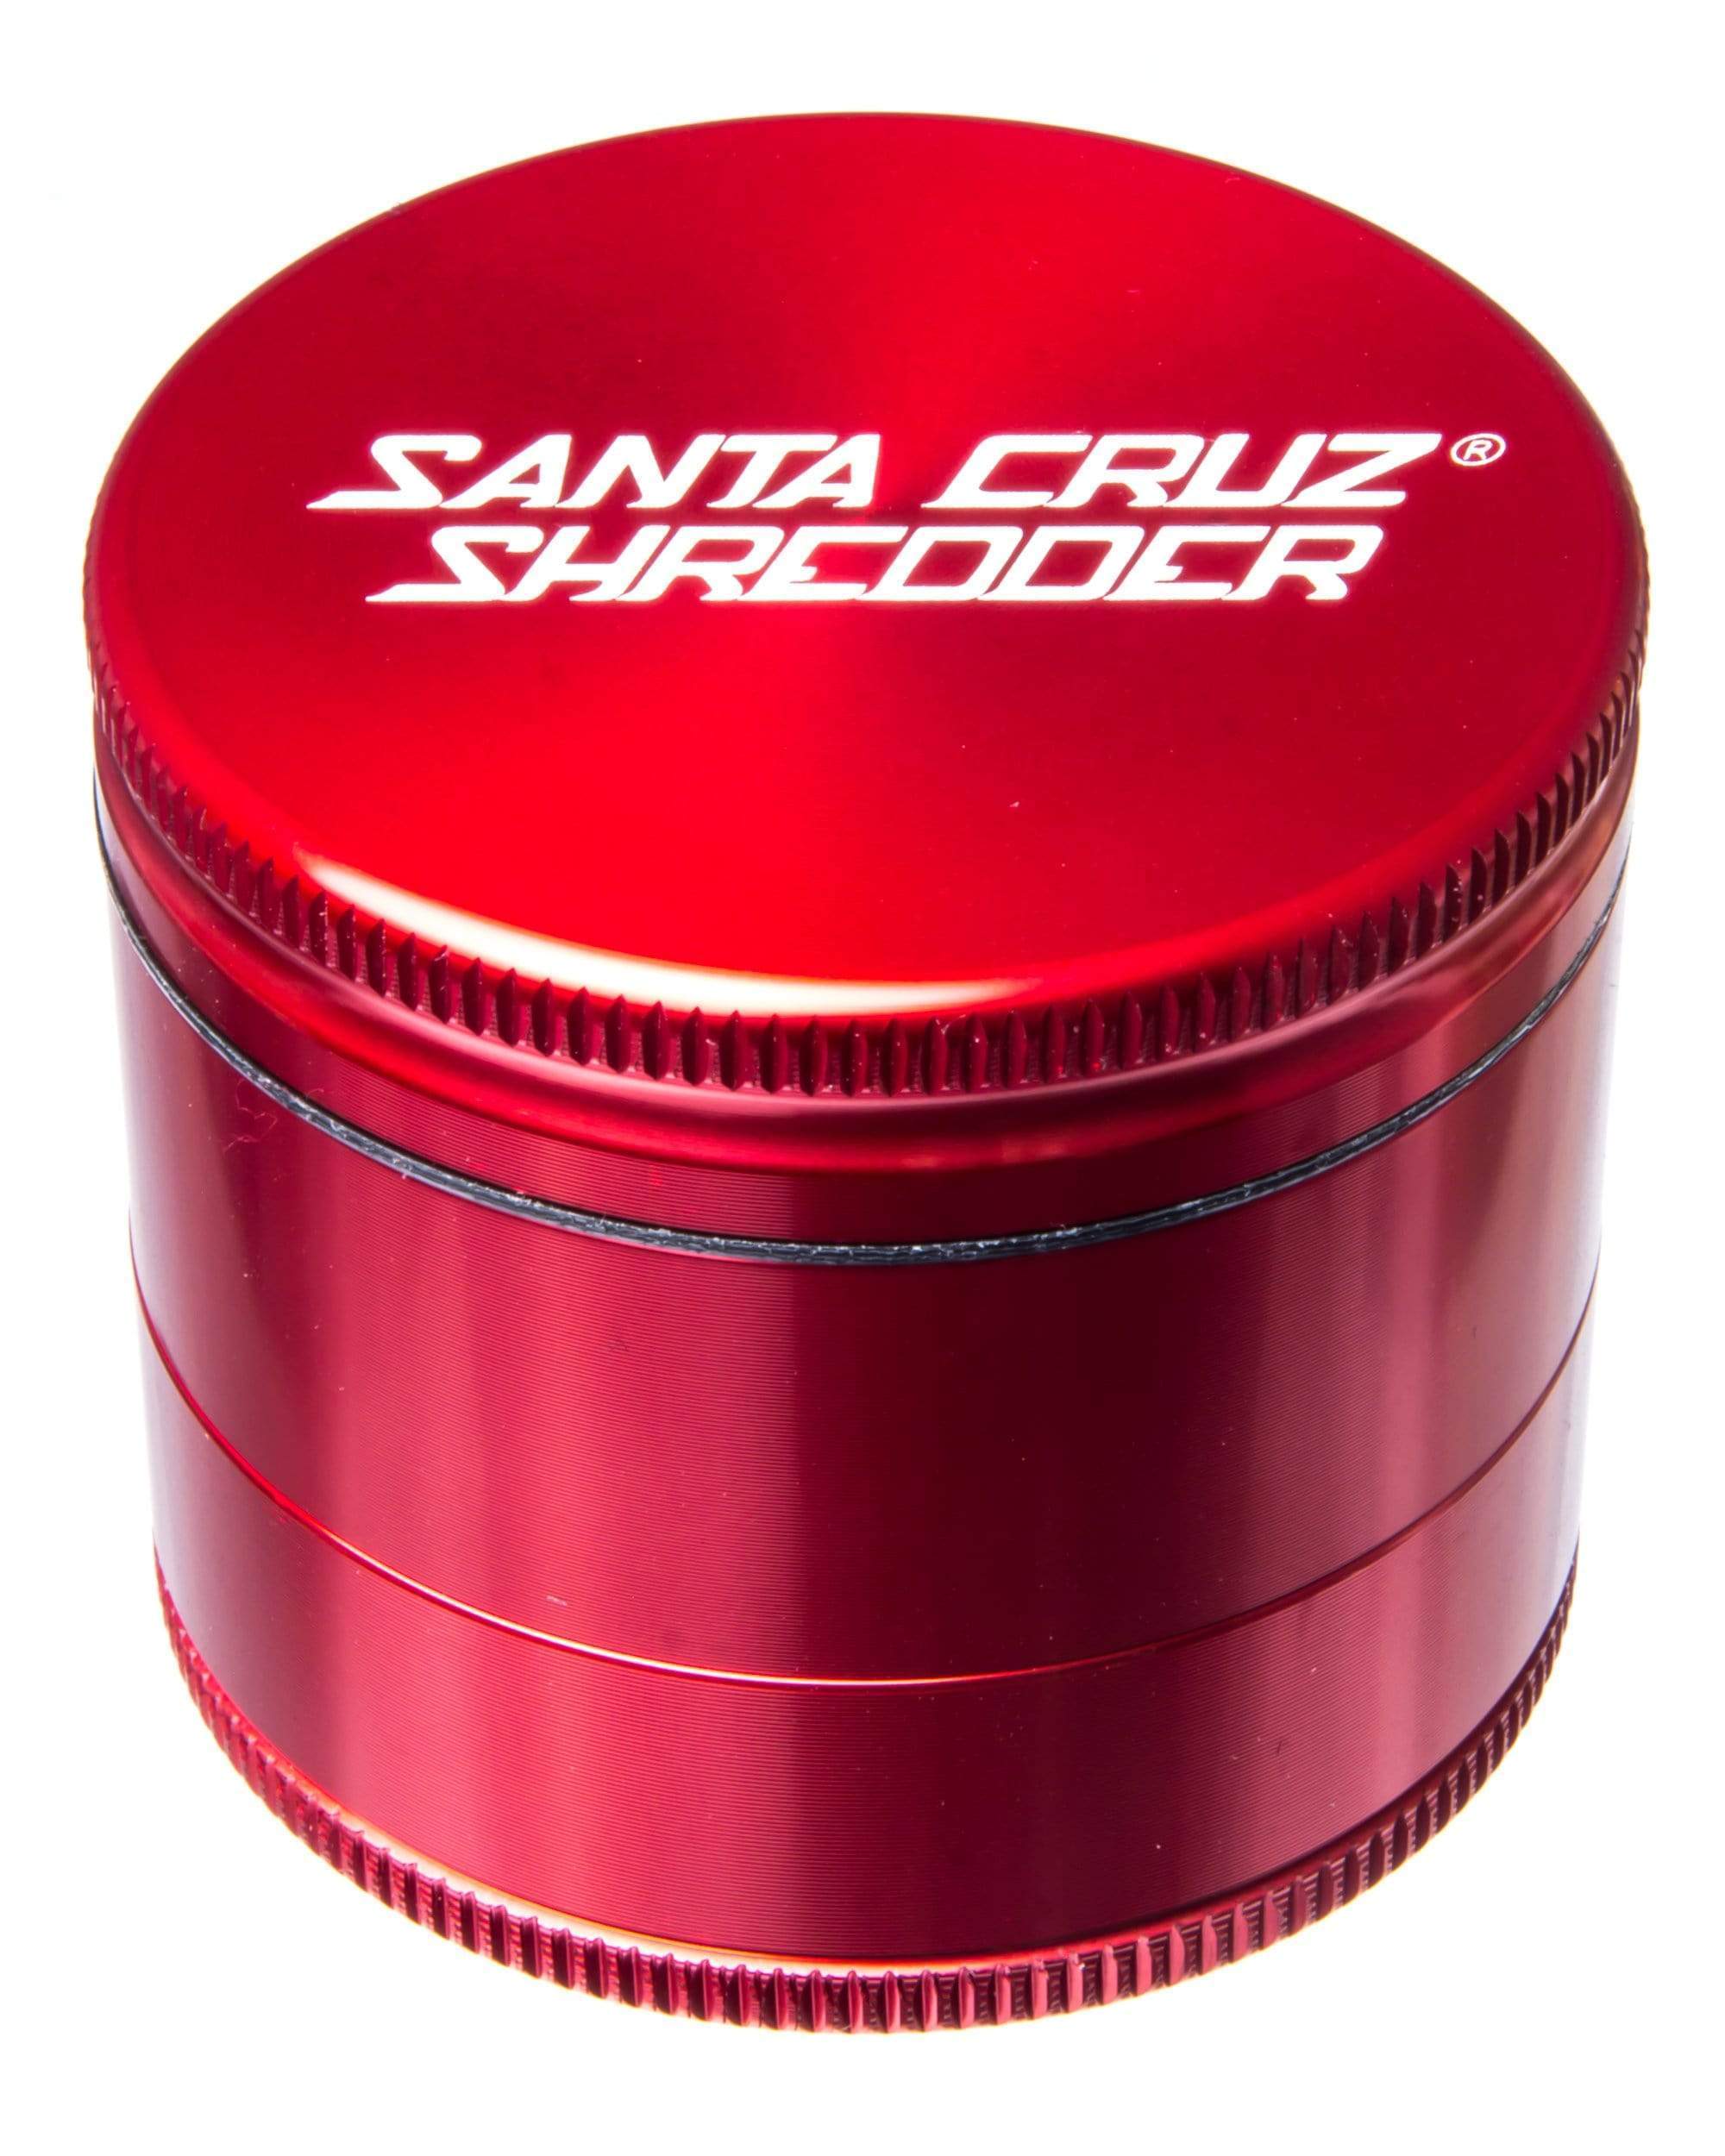 Santa Cruz Shredder Red Medium 3 Piece Herb Grinder